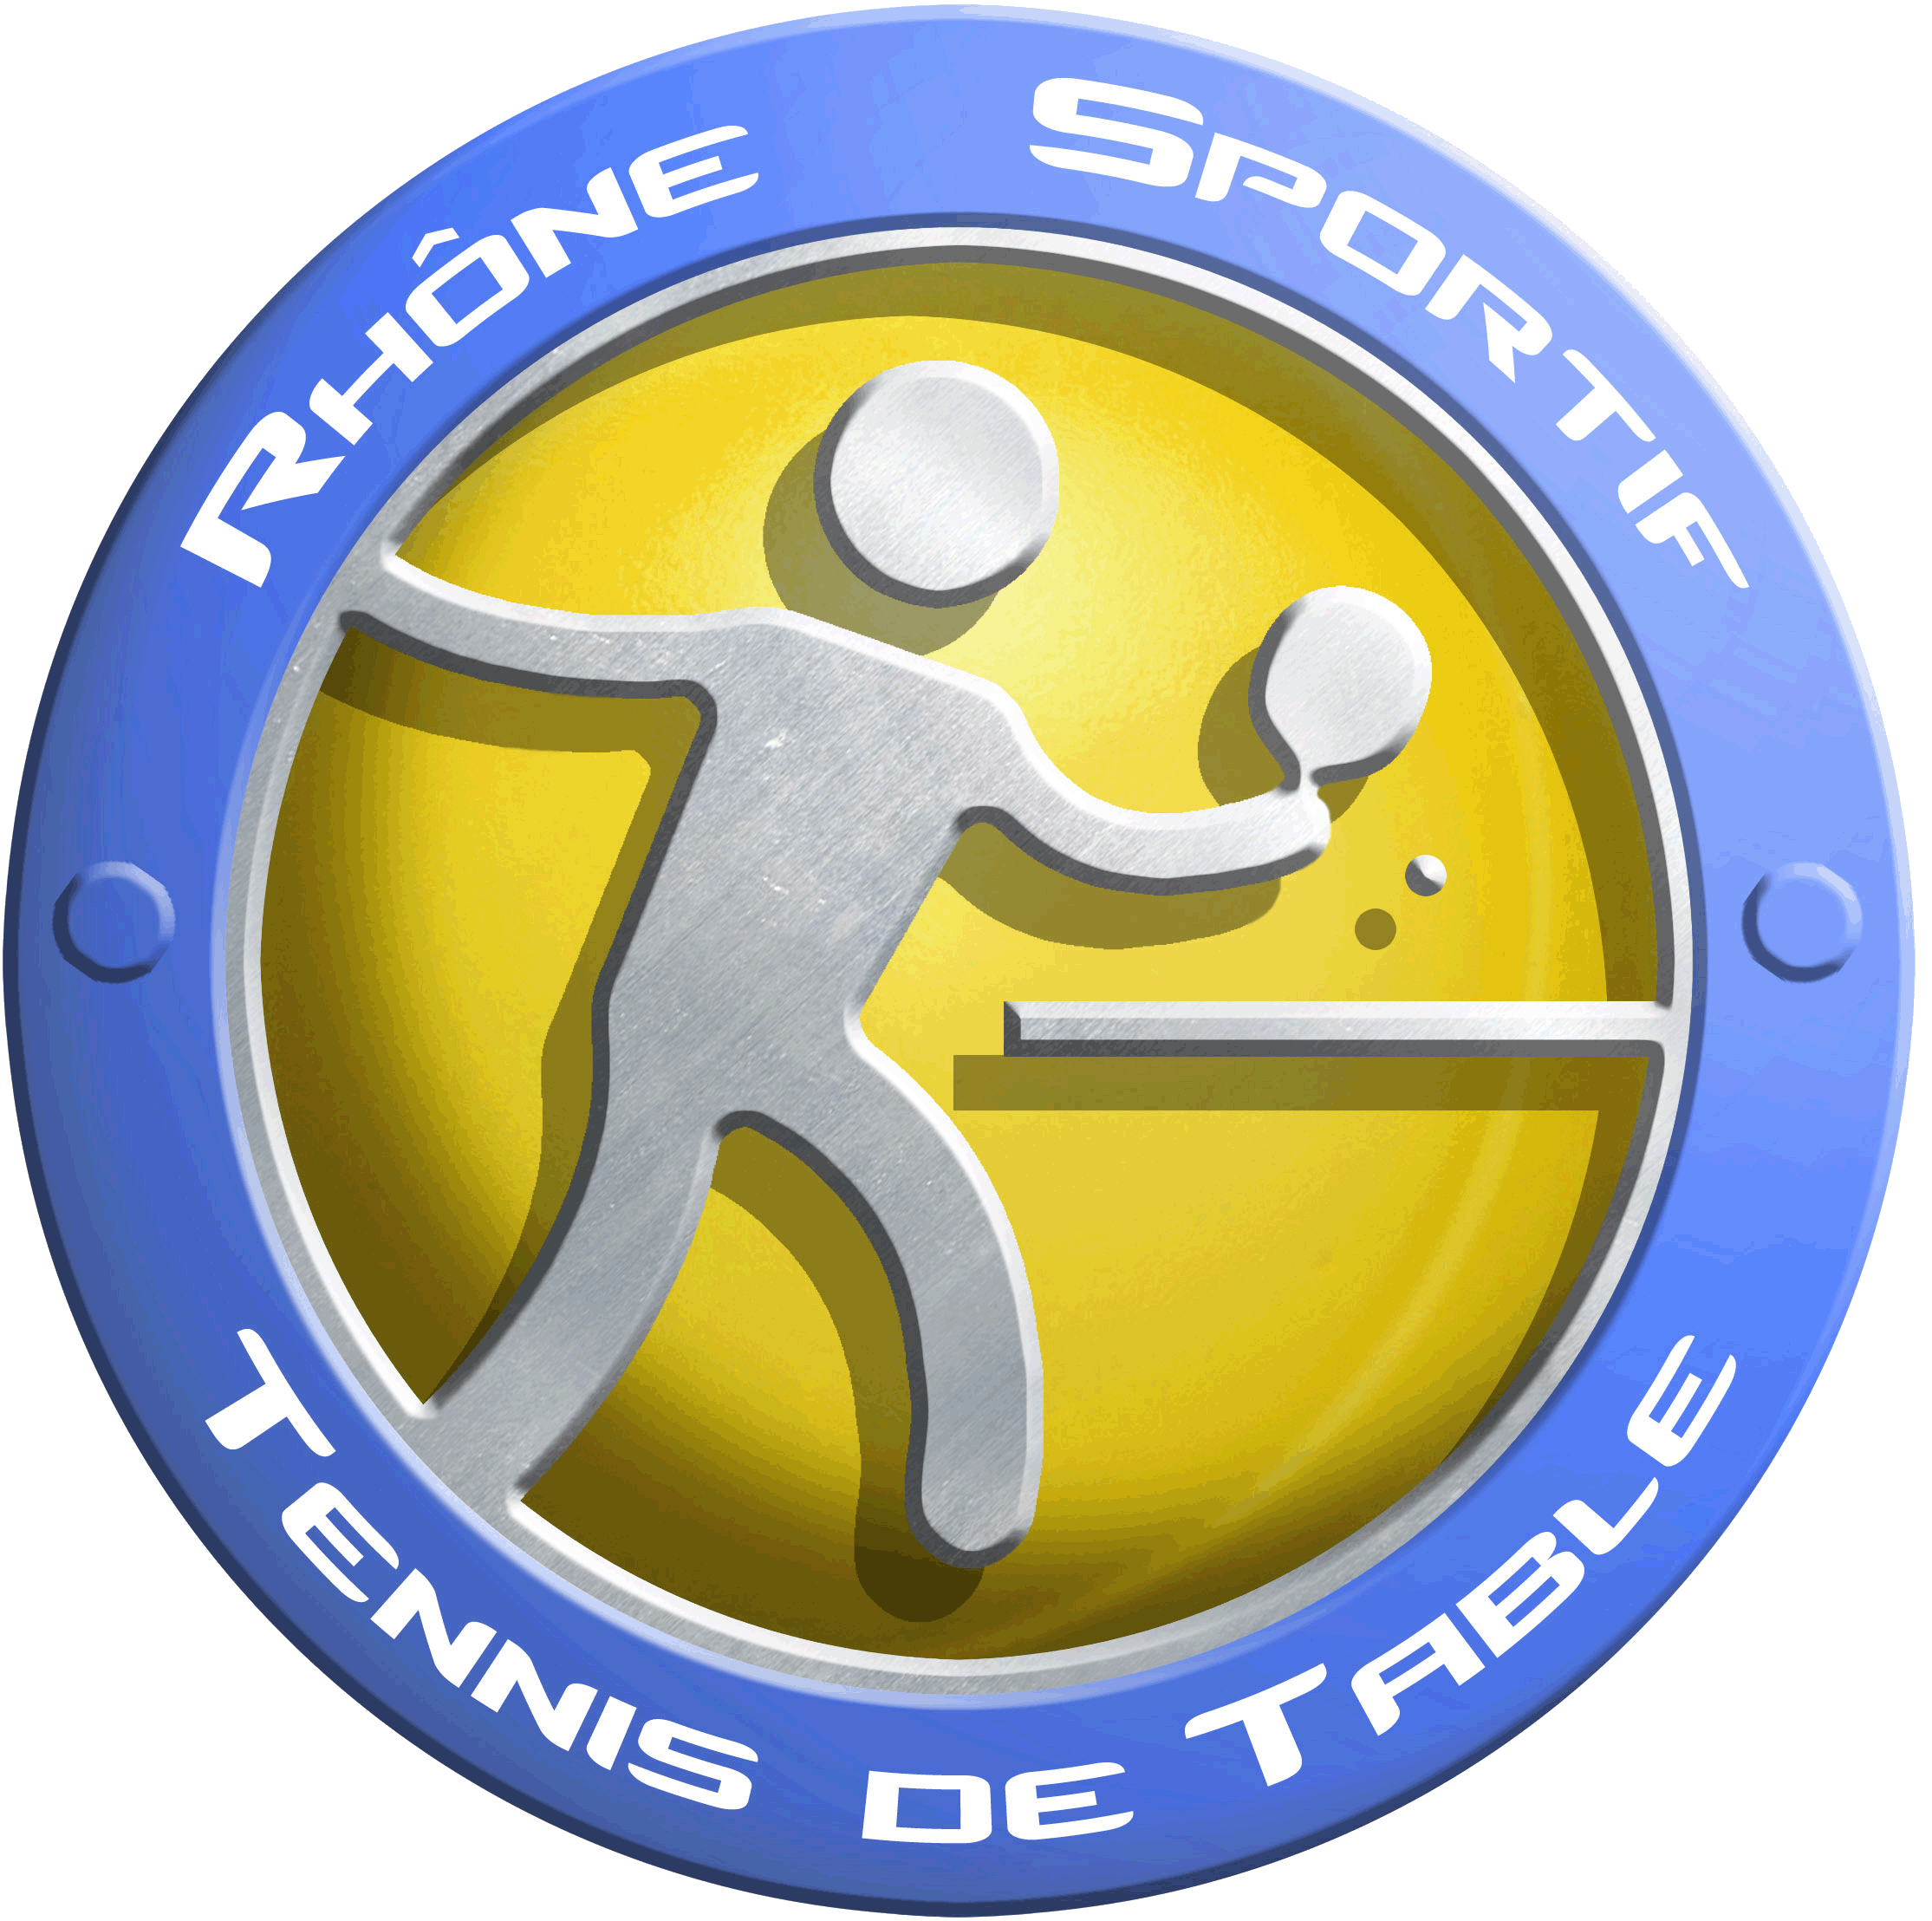 Rhone Sportif Tennis de Table